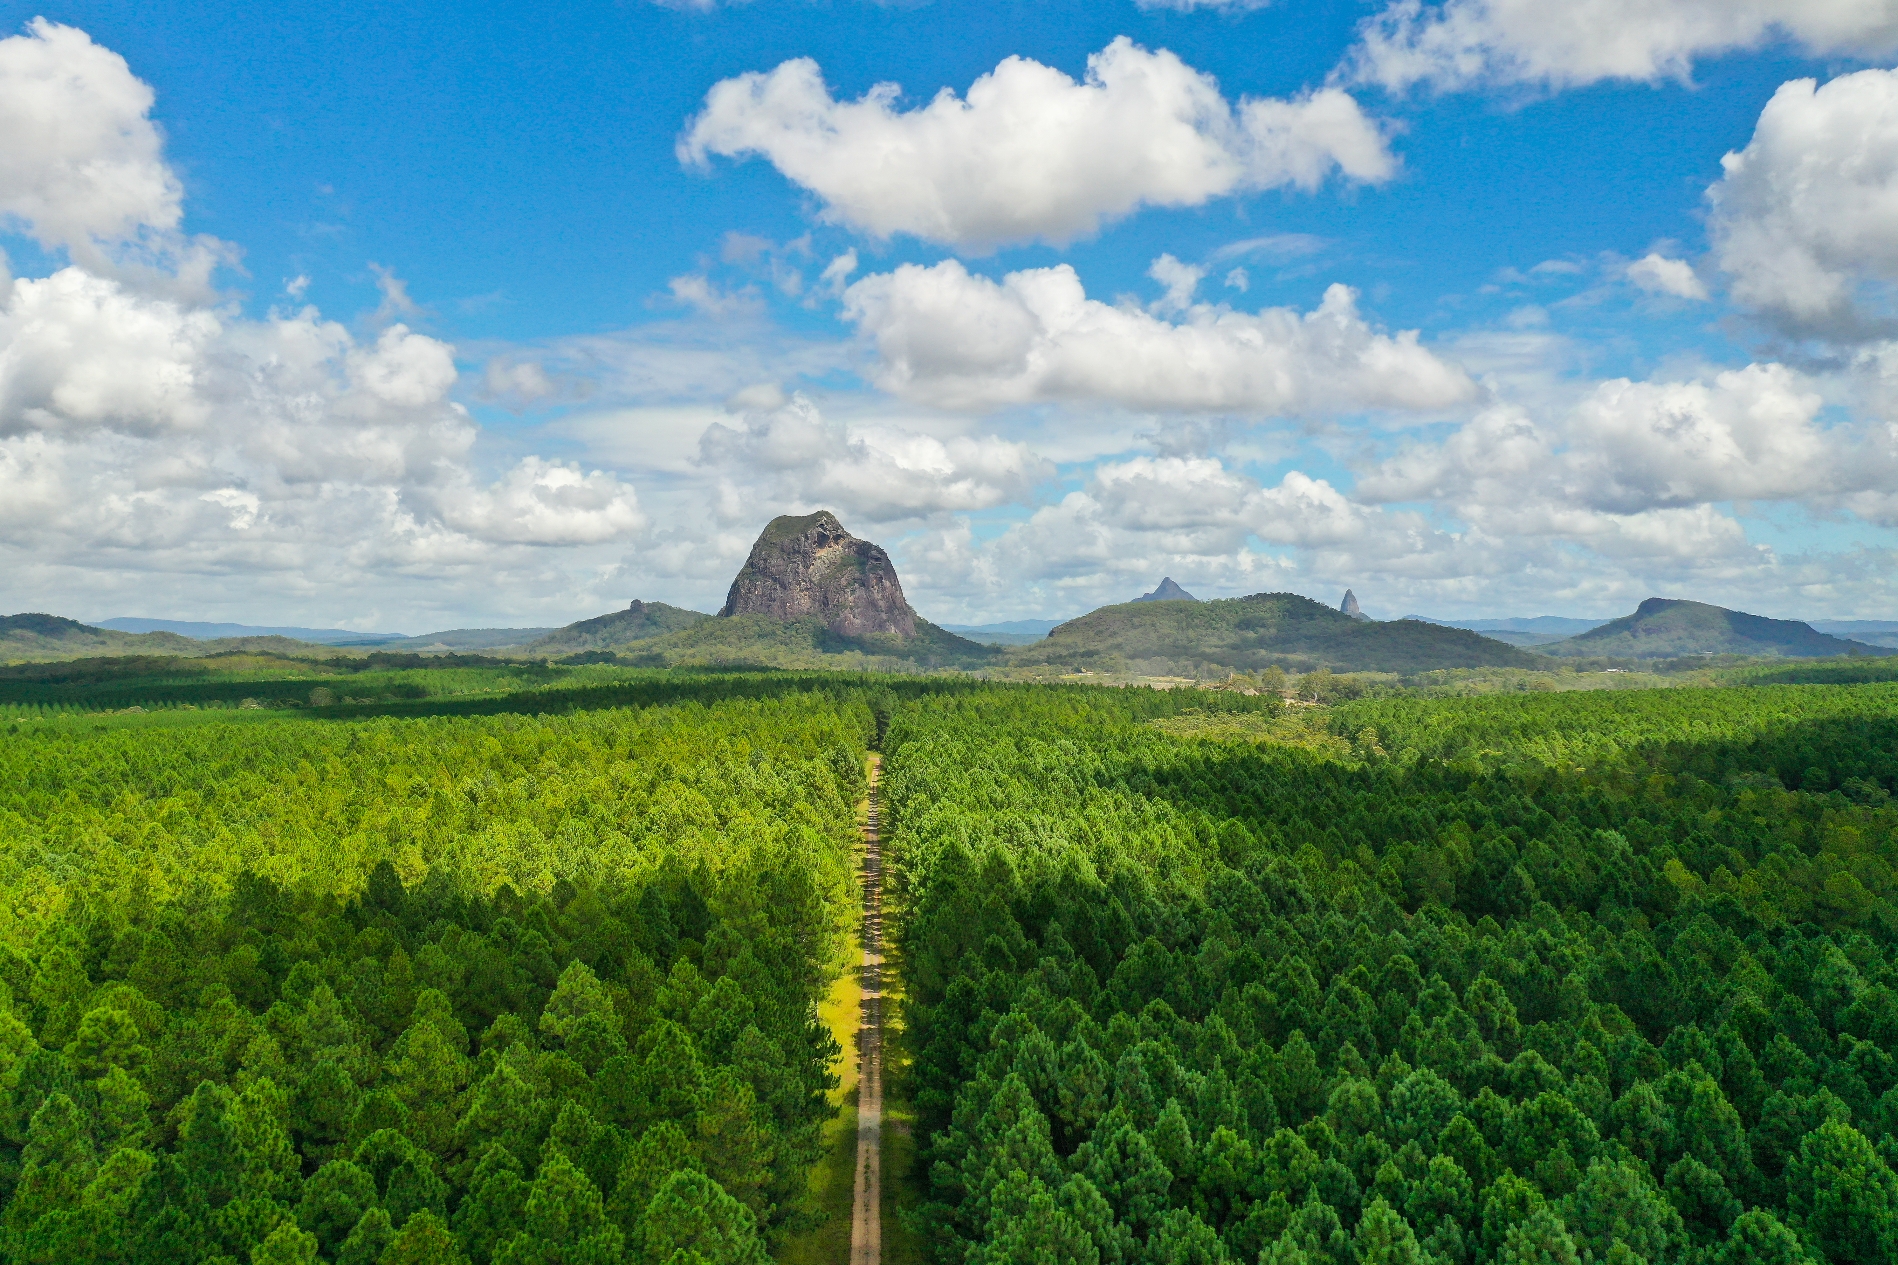 Beauty of HQP’s plantation forest category winner Doug Bazley's image of Mt Tibrogargan